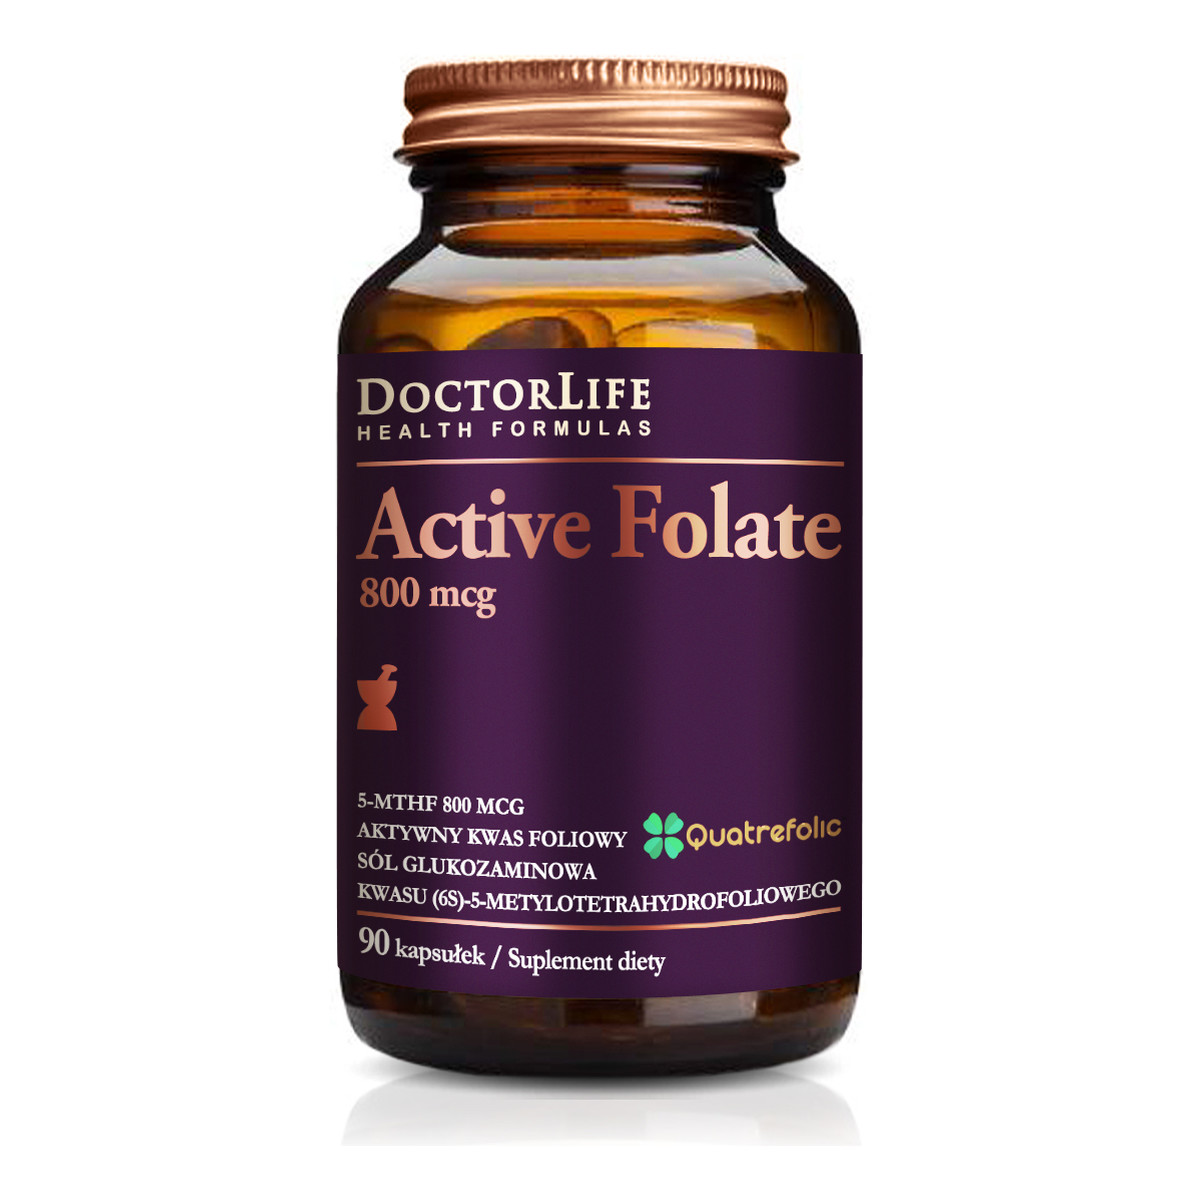 Doctor Life Active folate aktywny kwas foliowy 800mcg suplement diety 90 kapsułek